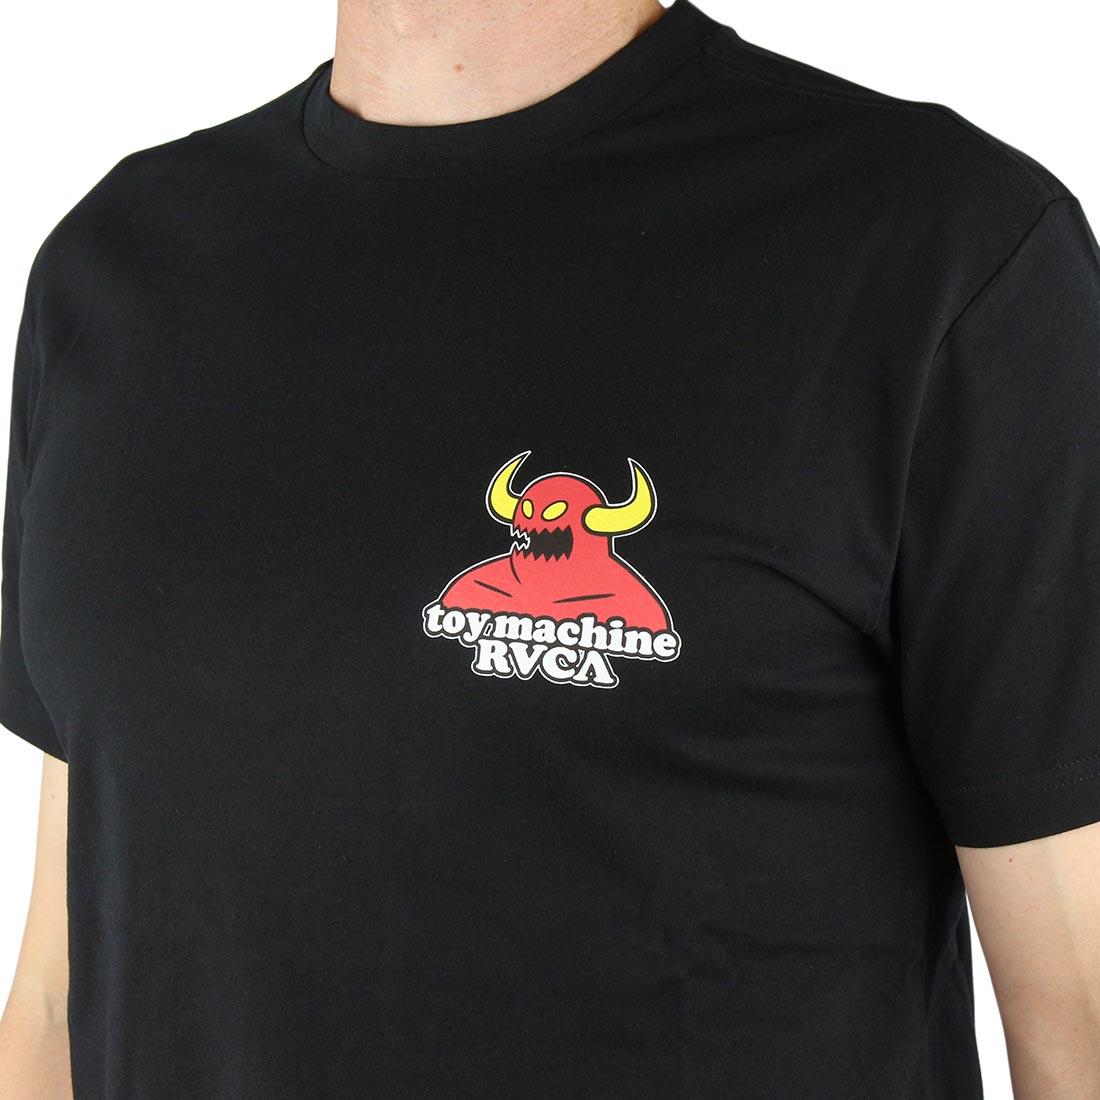 RVCA Small Logo - RVCA X Small Toy Machine S S T Shirt